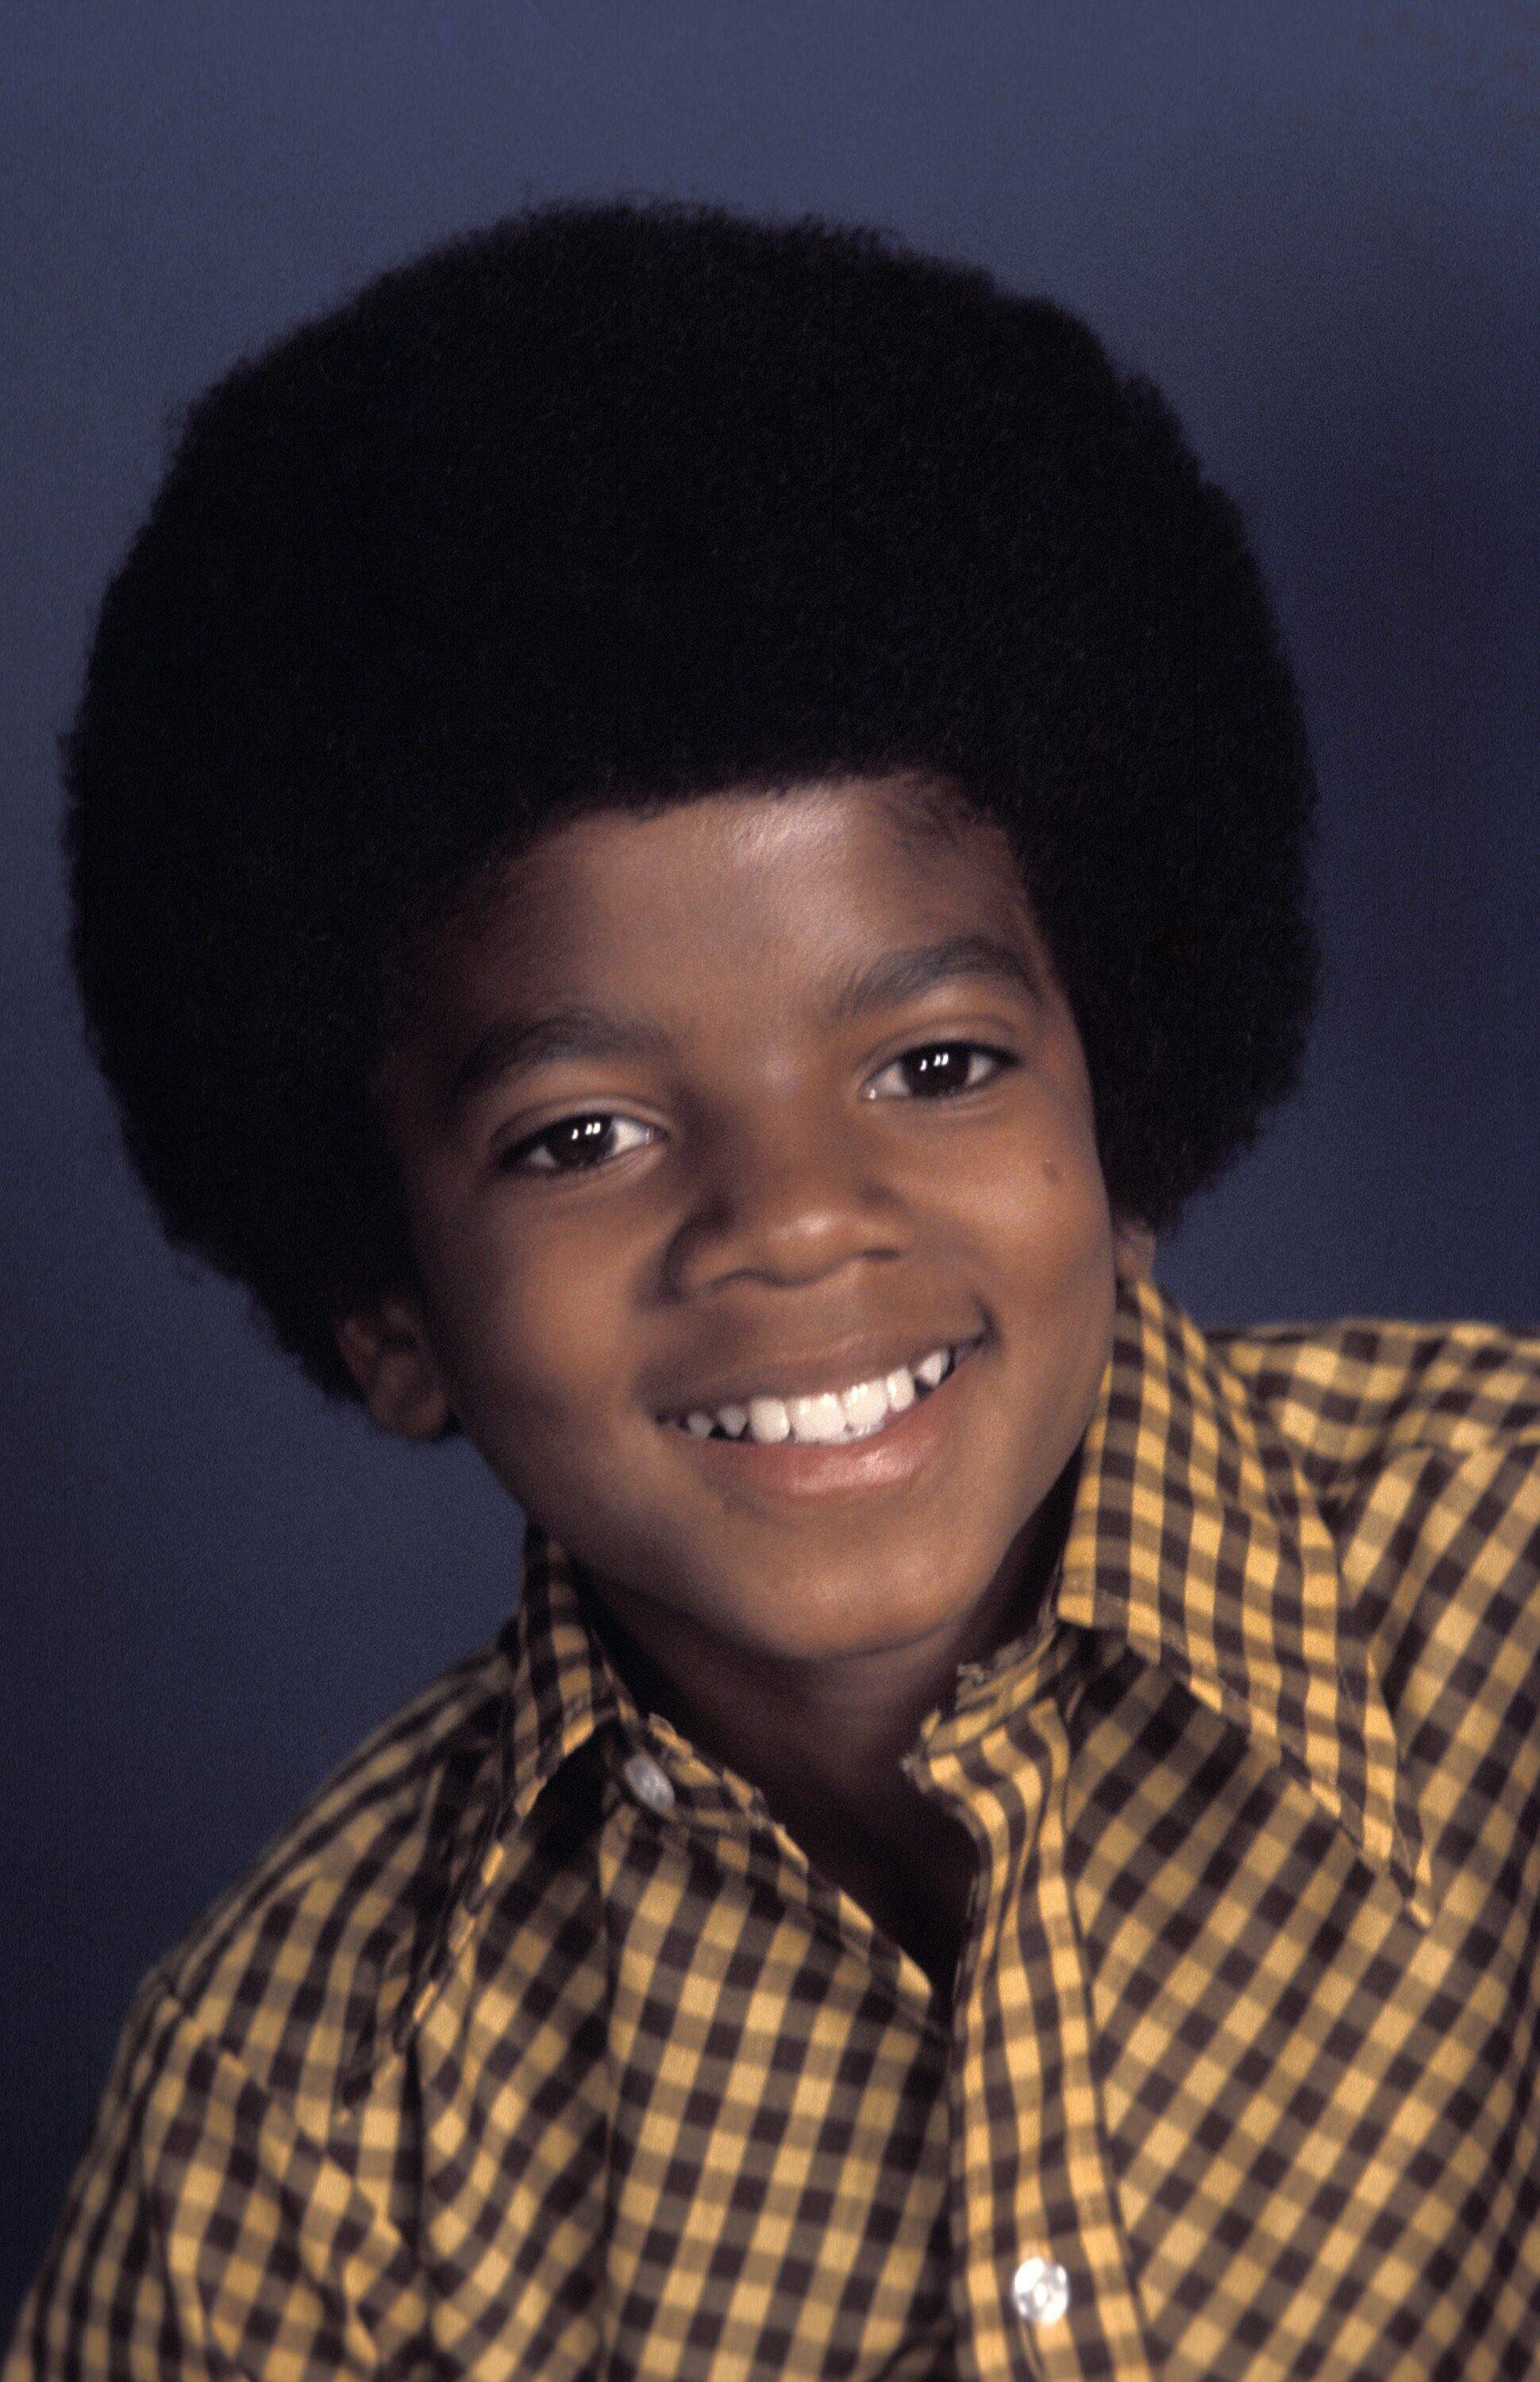 Michael Jackson joven 